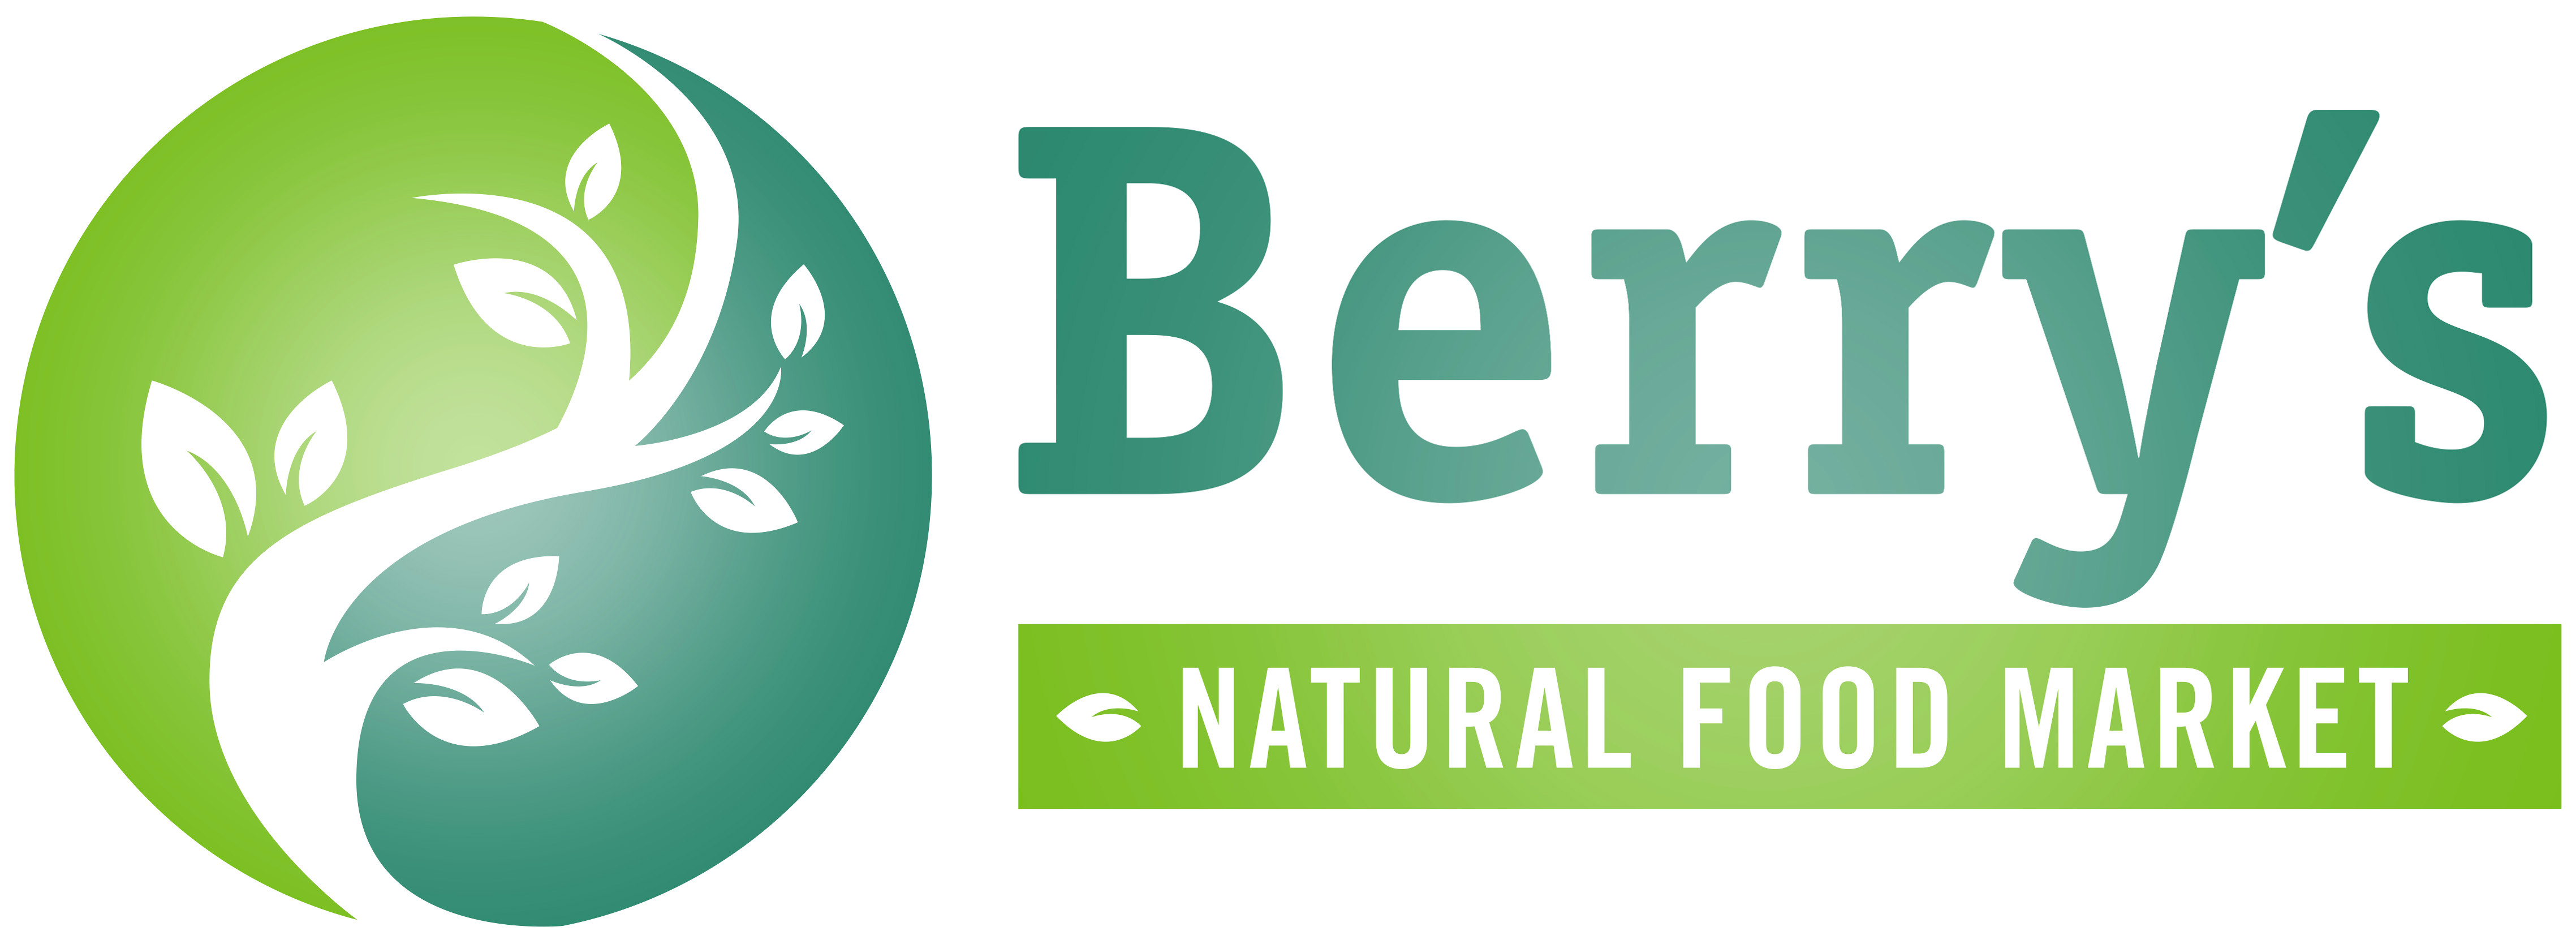 Berry's Natural Food Market logo